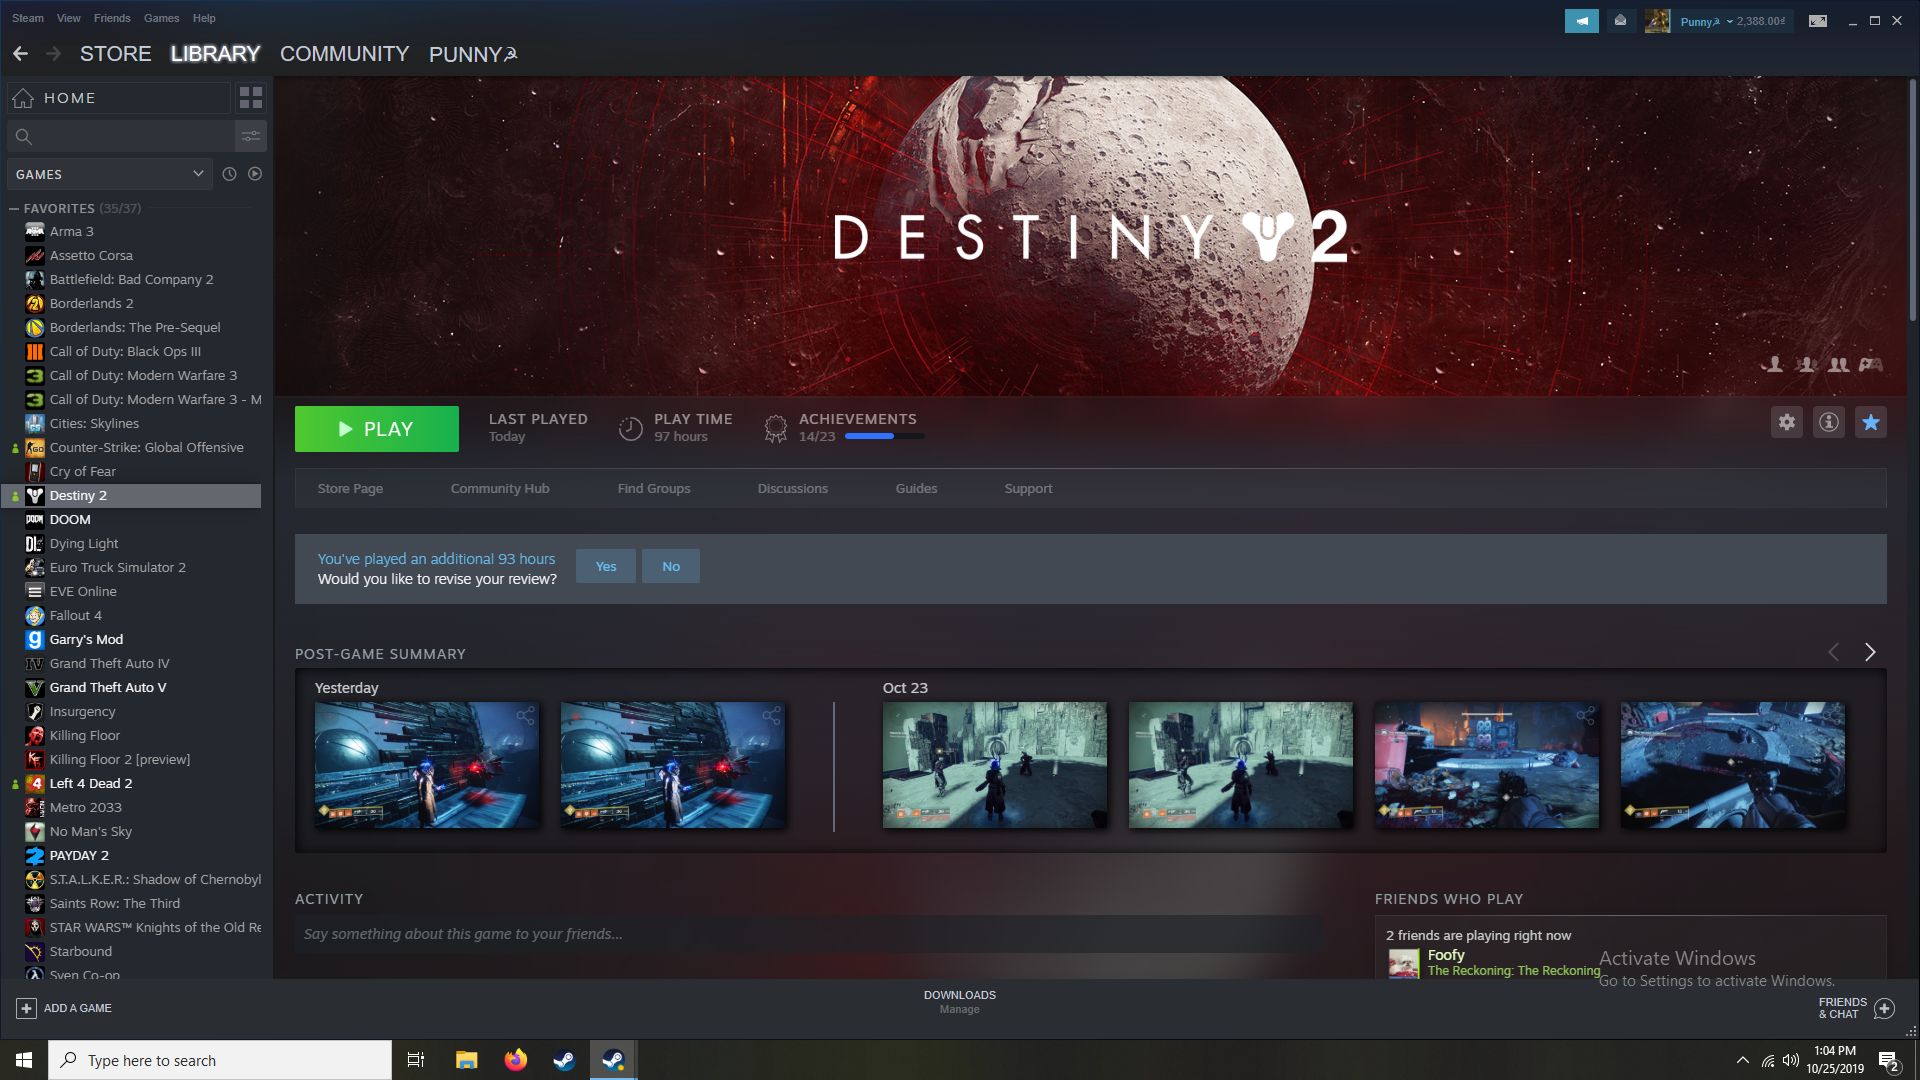 Destiny 2 on Steam